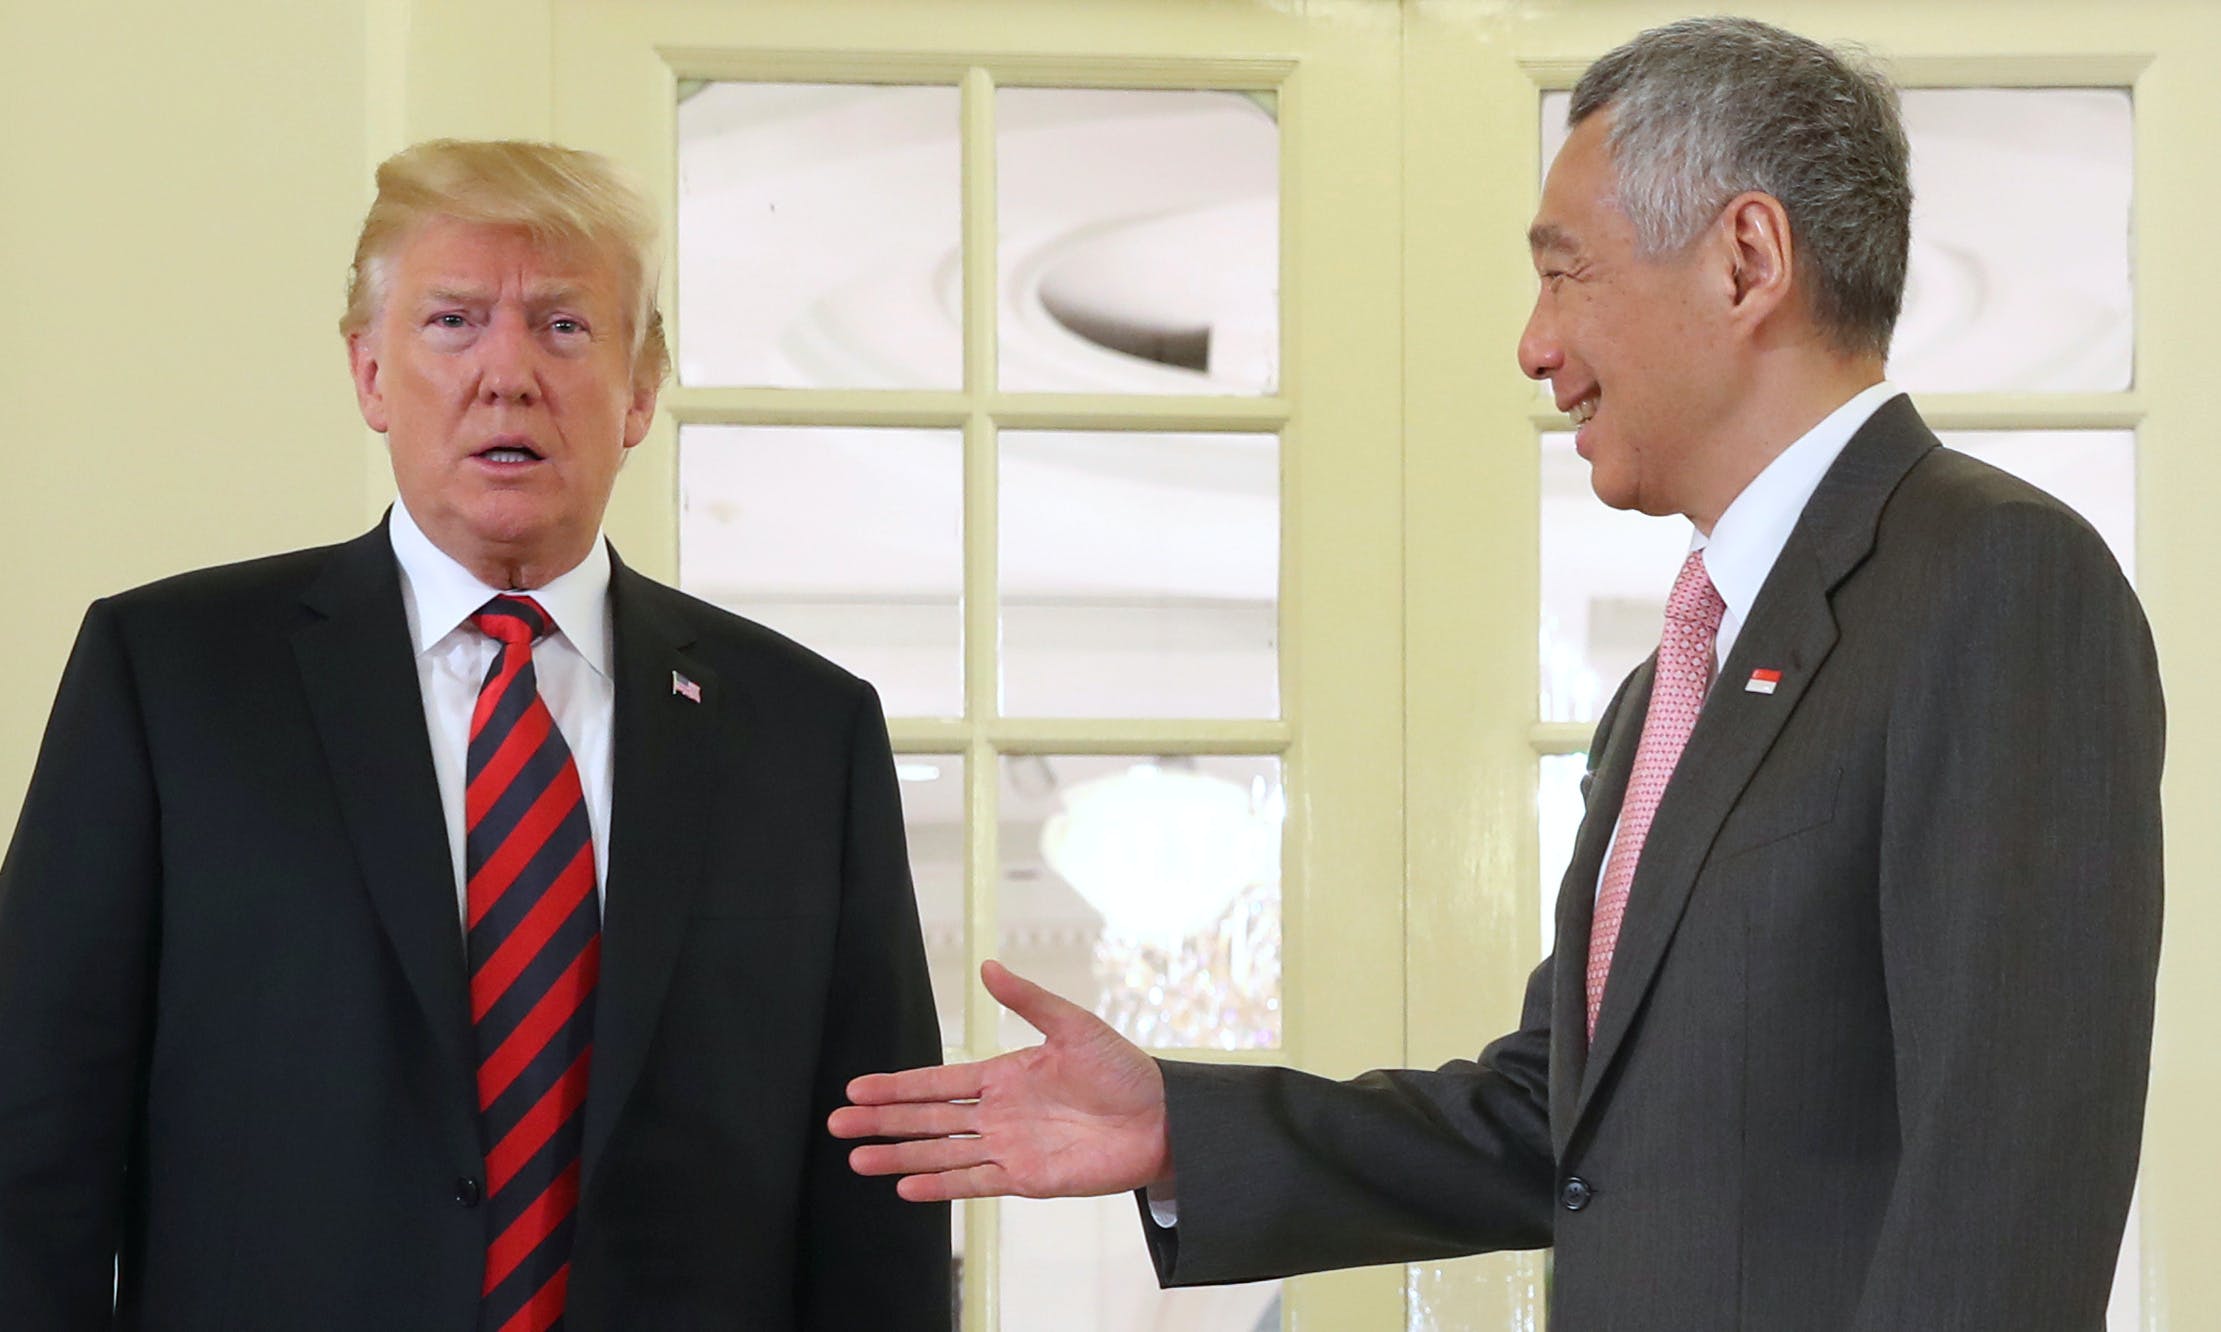 OPINION: Why I Oppose Singapore Hosting the Trump-Kim Summit